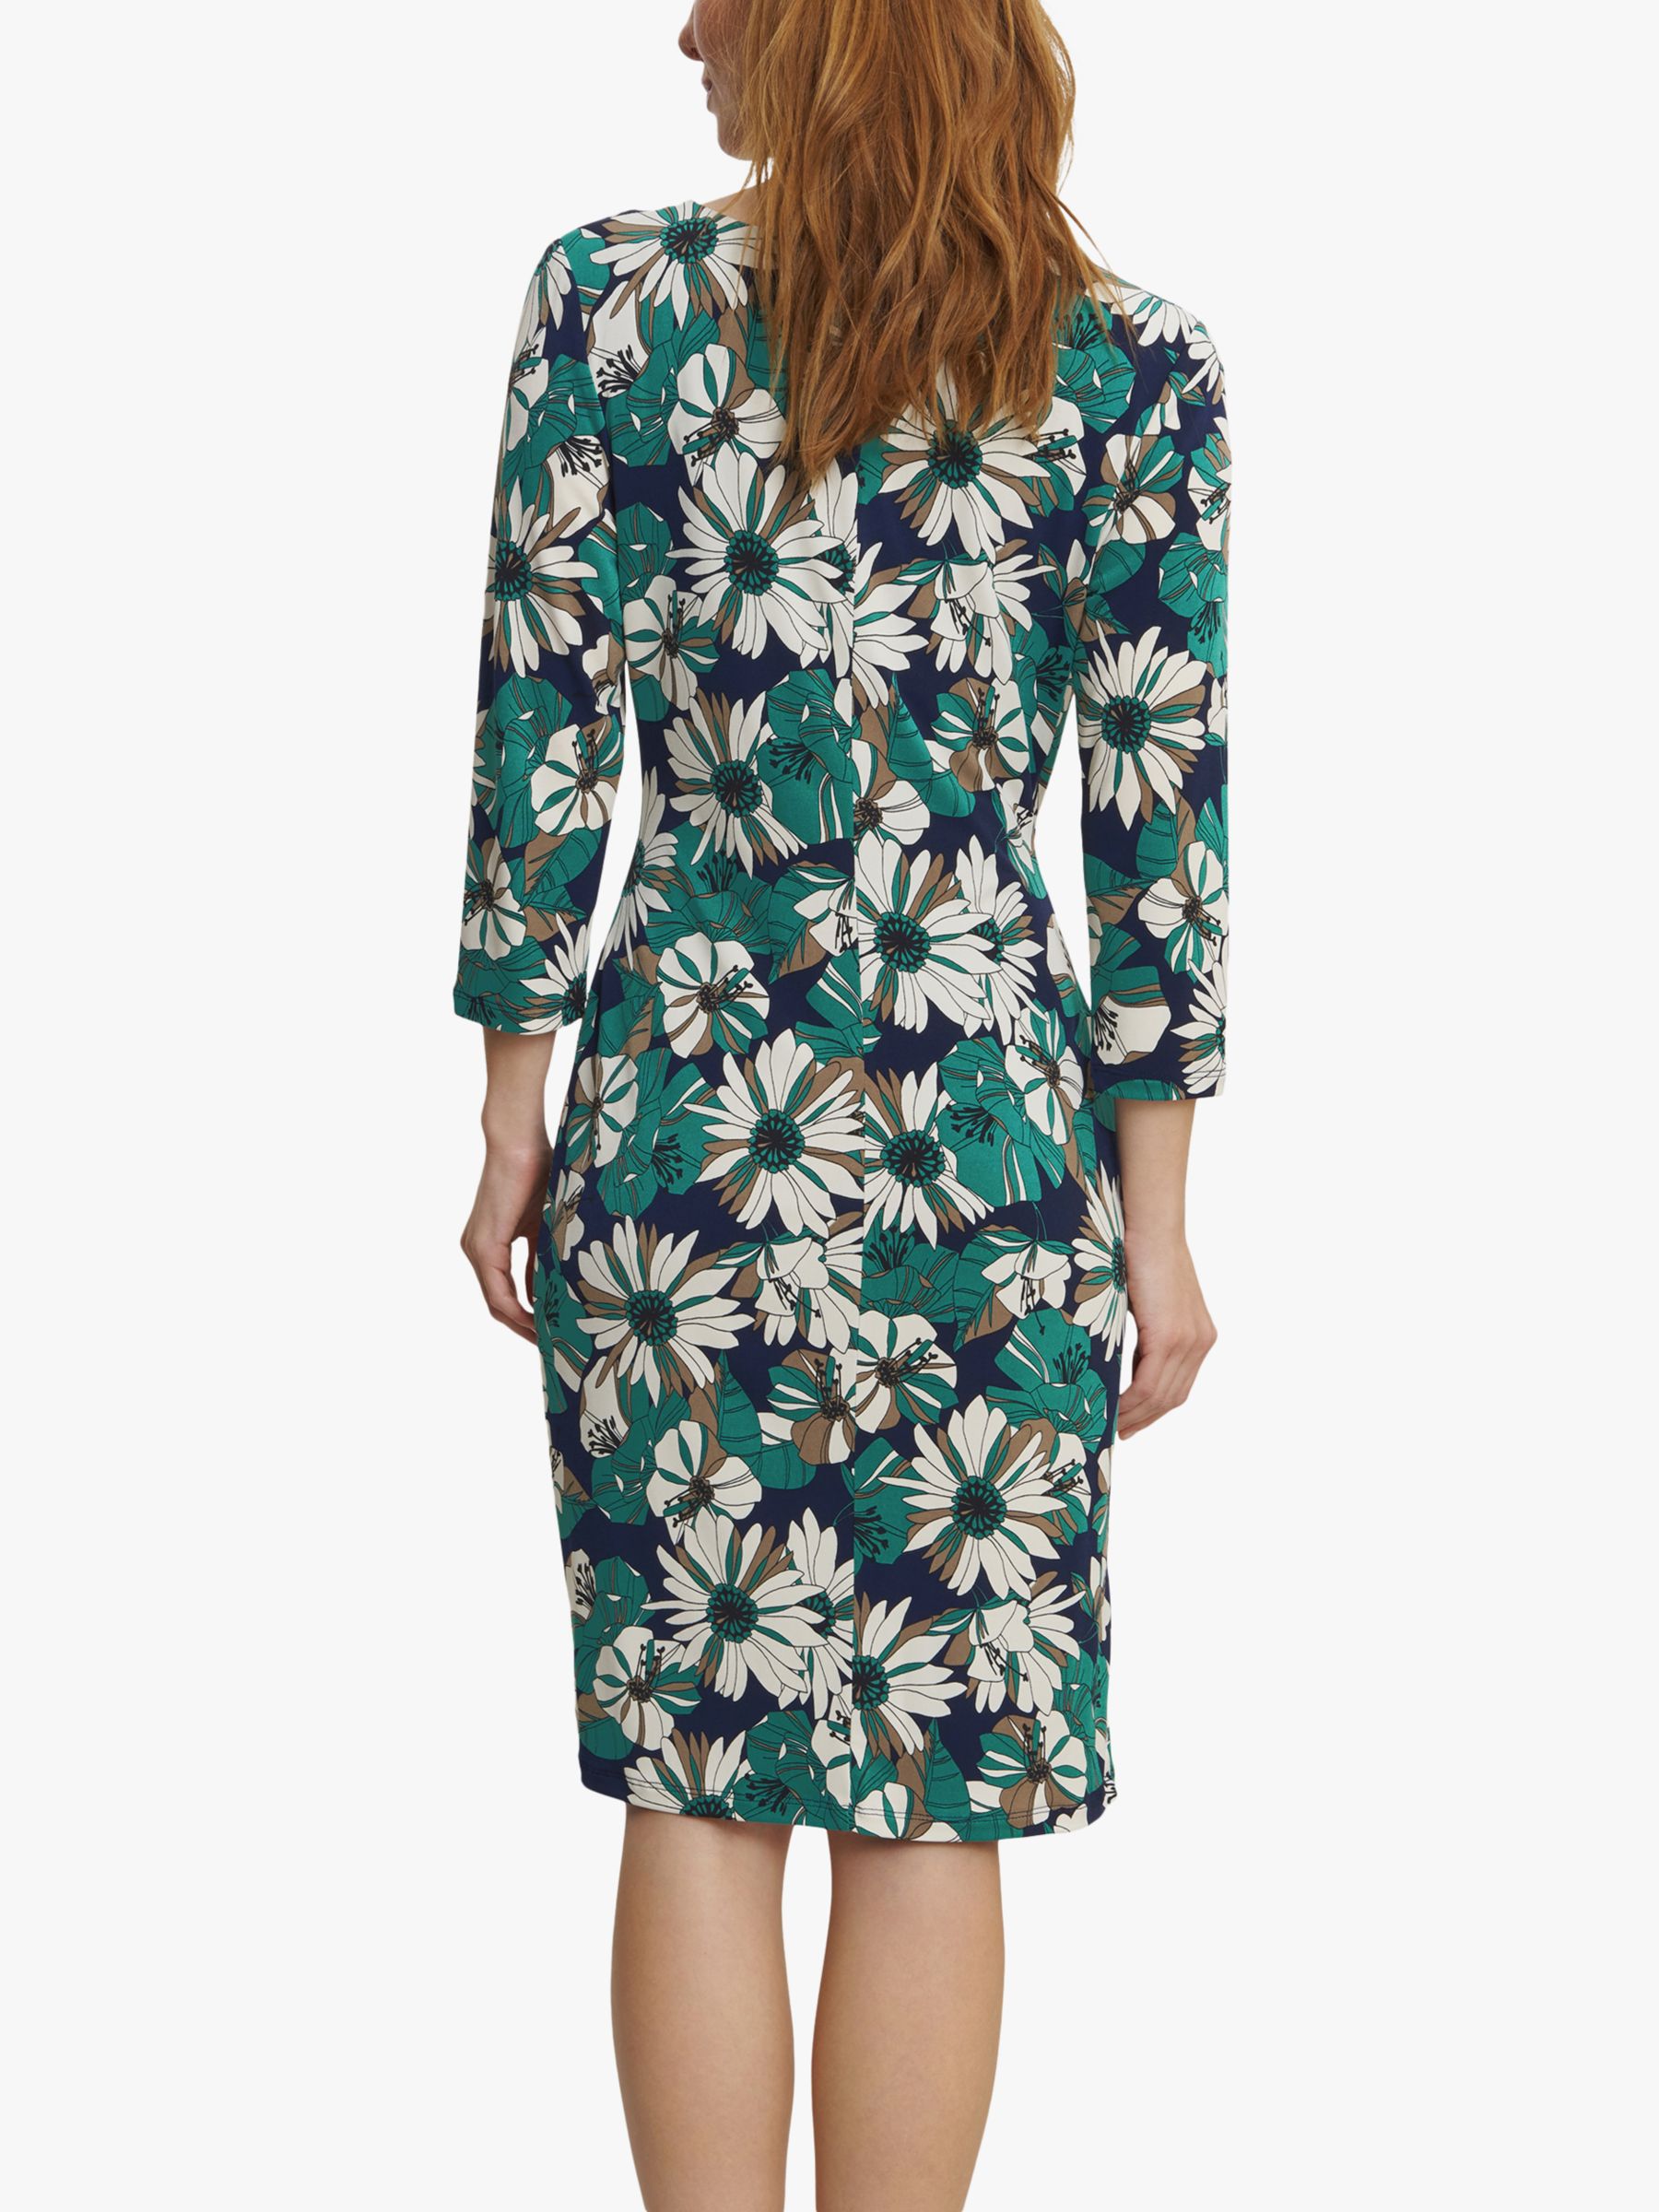 Buy Gina Bacconi Talie Floral Print Jersey Dress, Navy/Green Online at johnlewis.com